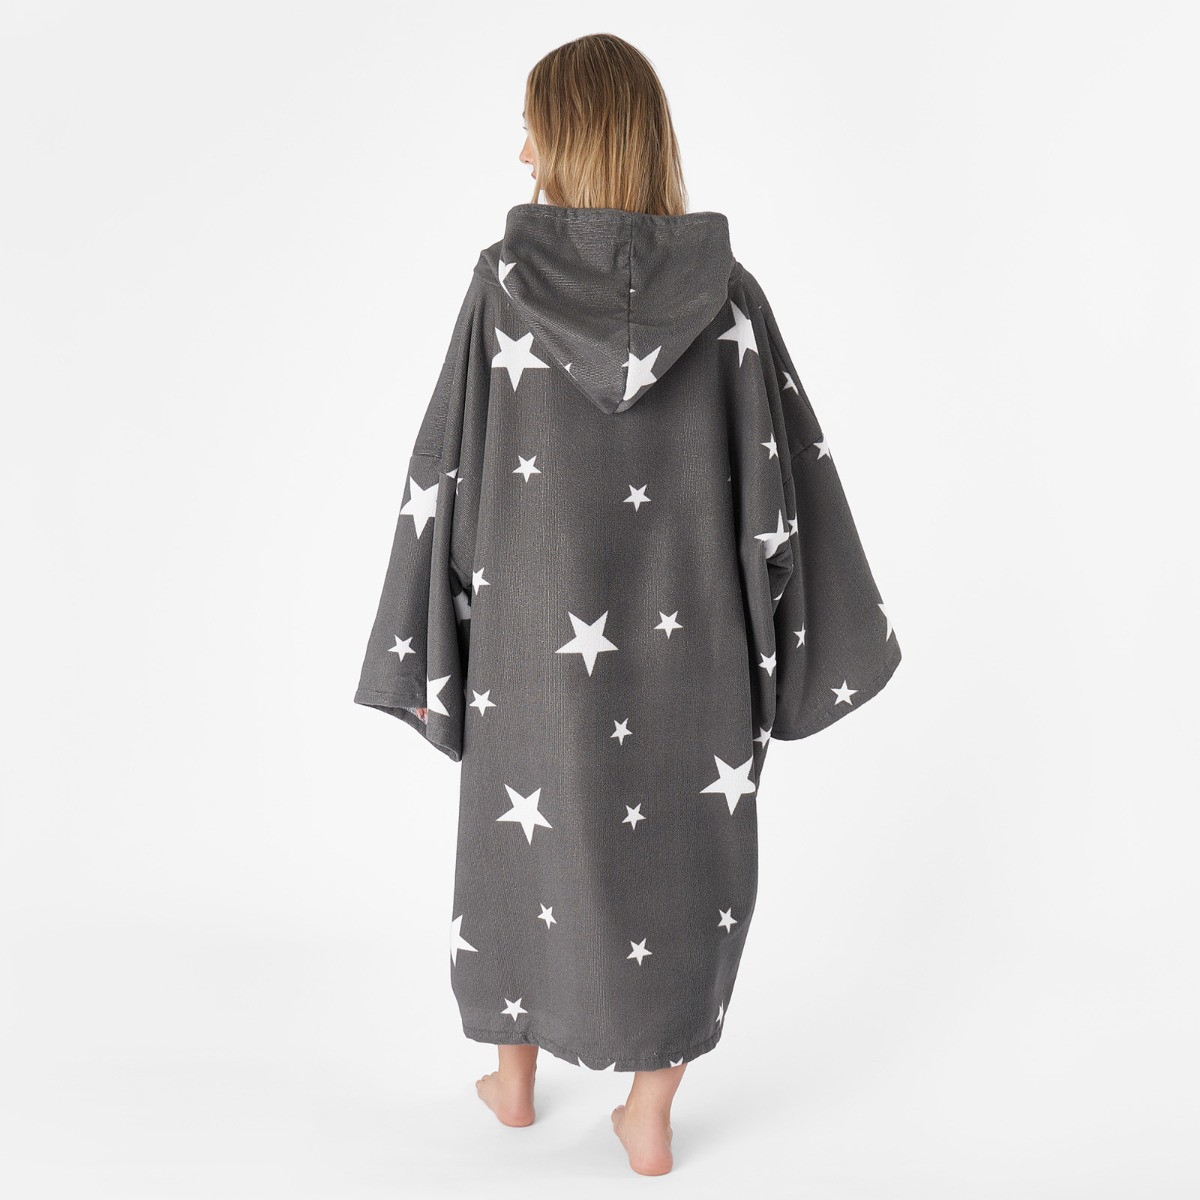 OHS Adult Towel Poncho Star Print - Charcoal Grey>